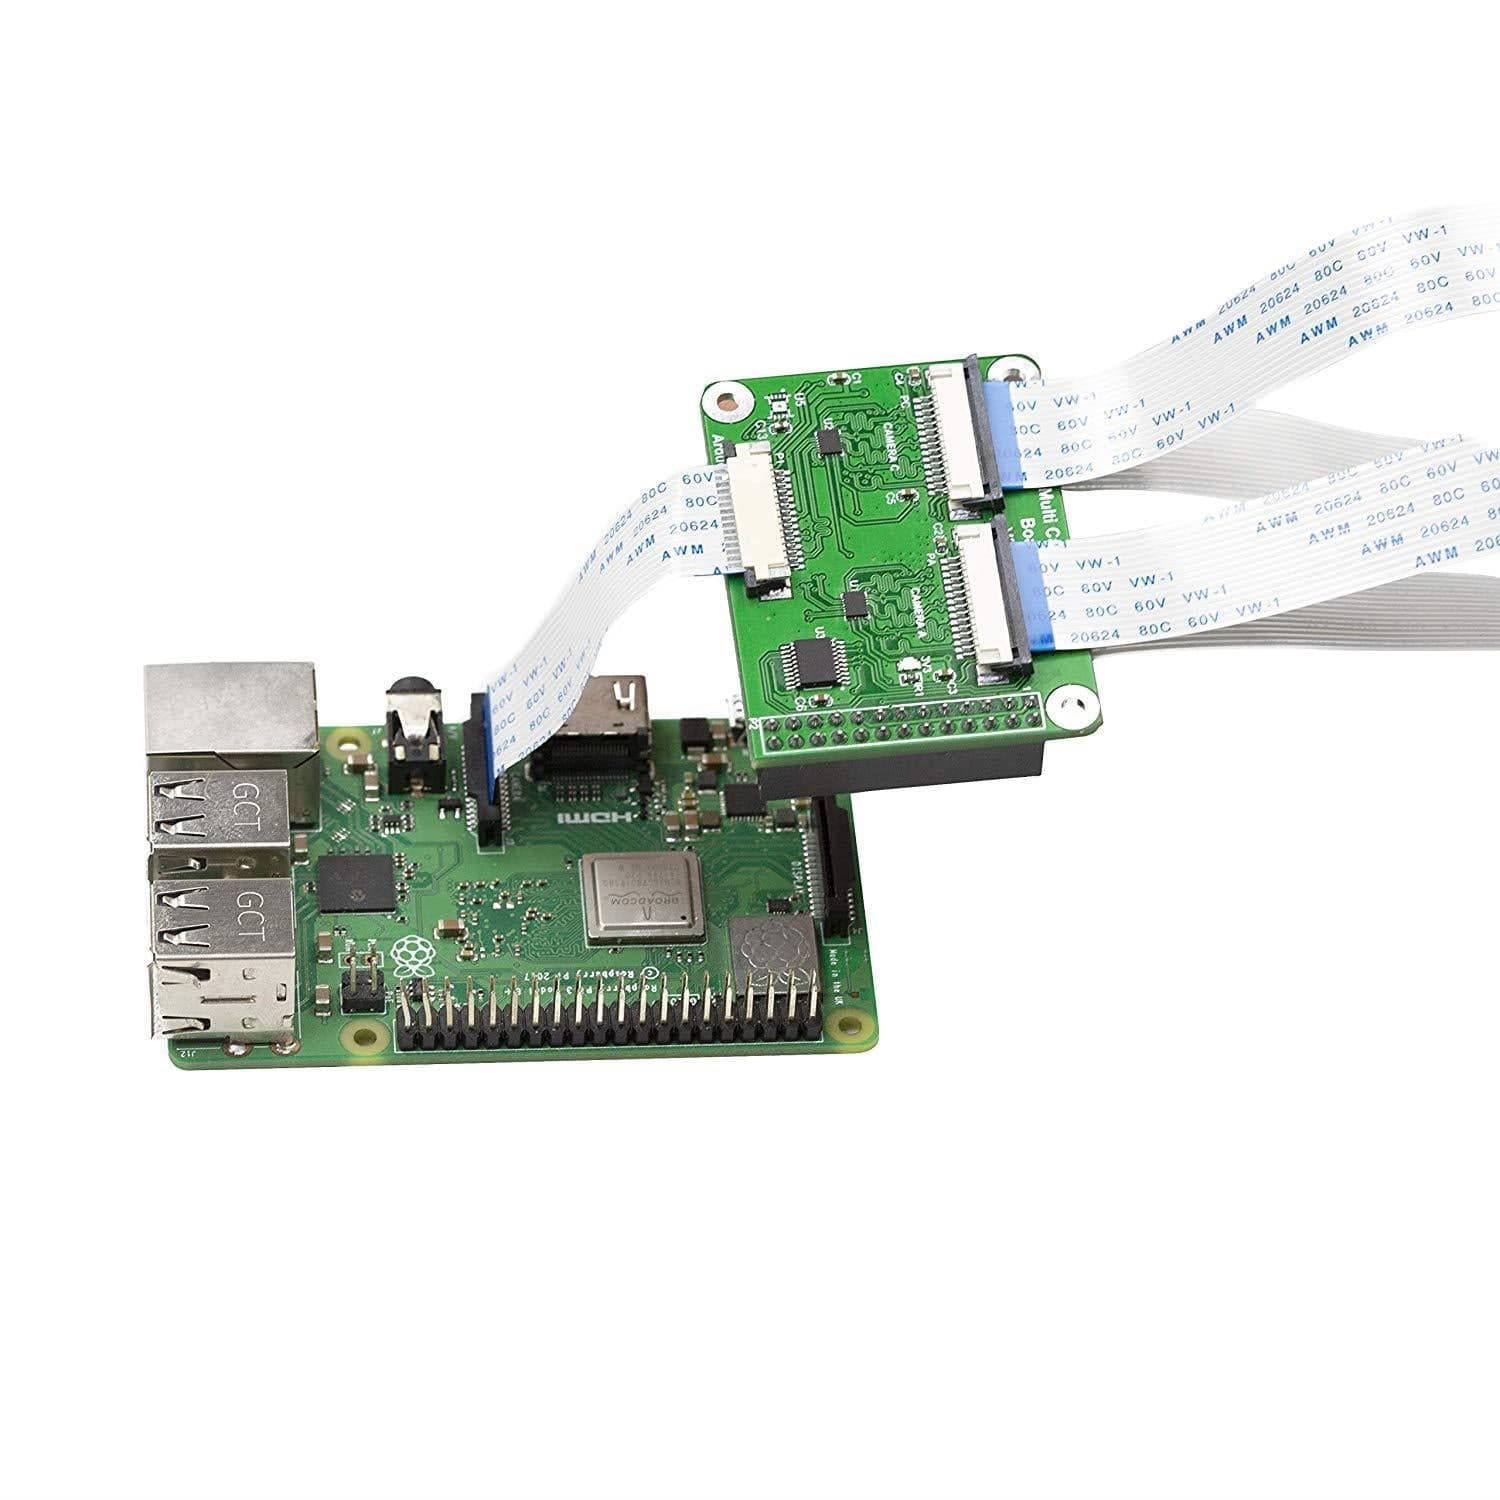 Multi Camera Adapter Module V2.2 for Raspberry Pi - The Pi Hut